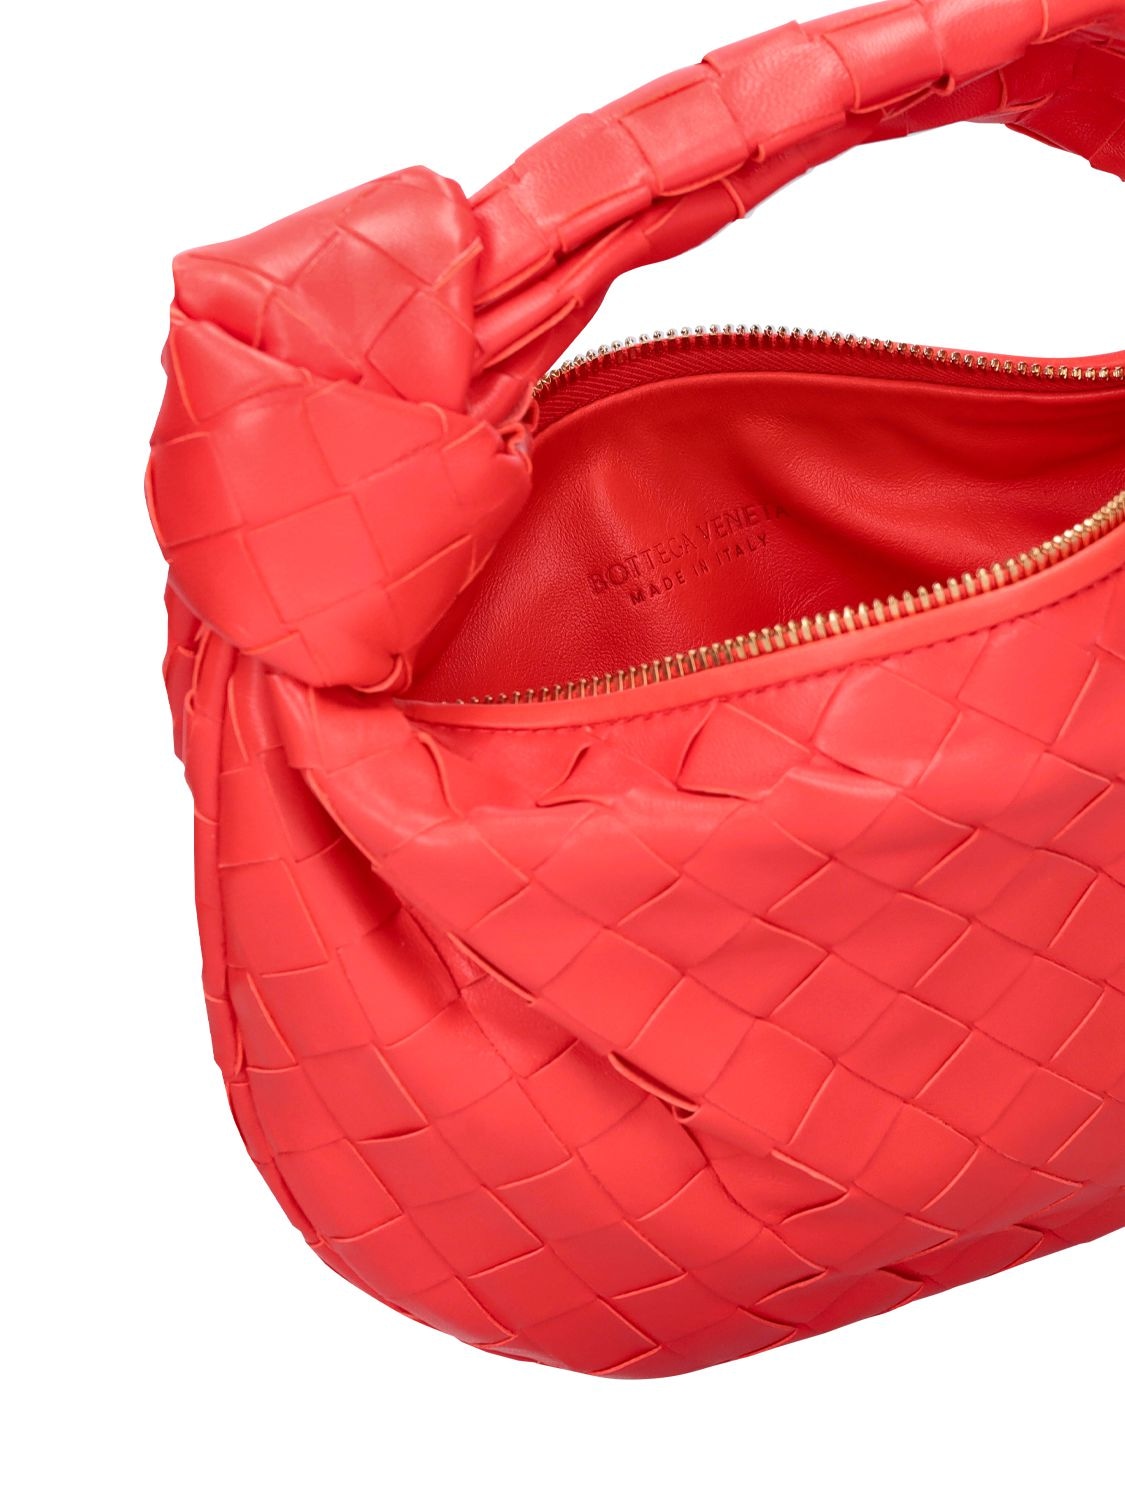 Bottega Veneta Mini Jodie Intrecciato Sunburst Leather Top Handle Bag New